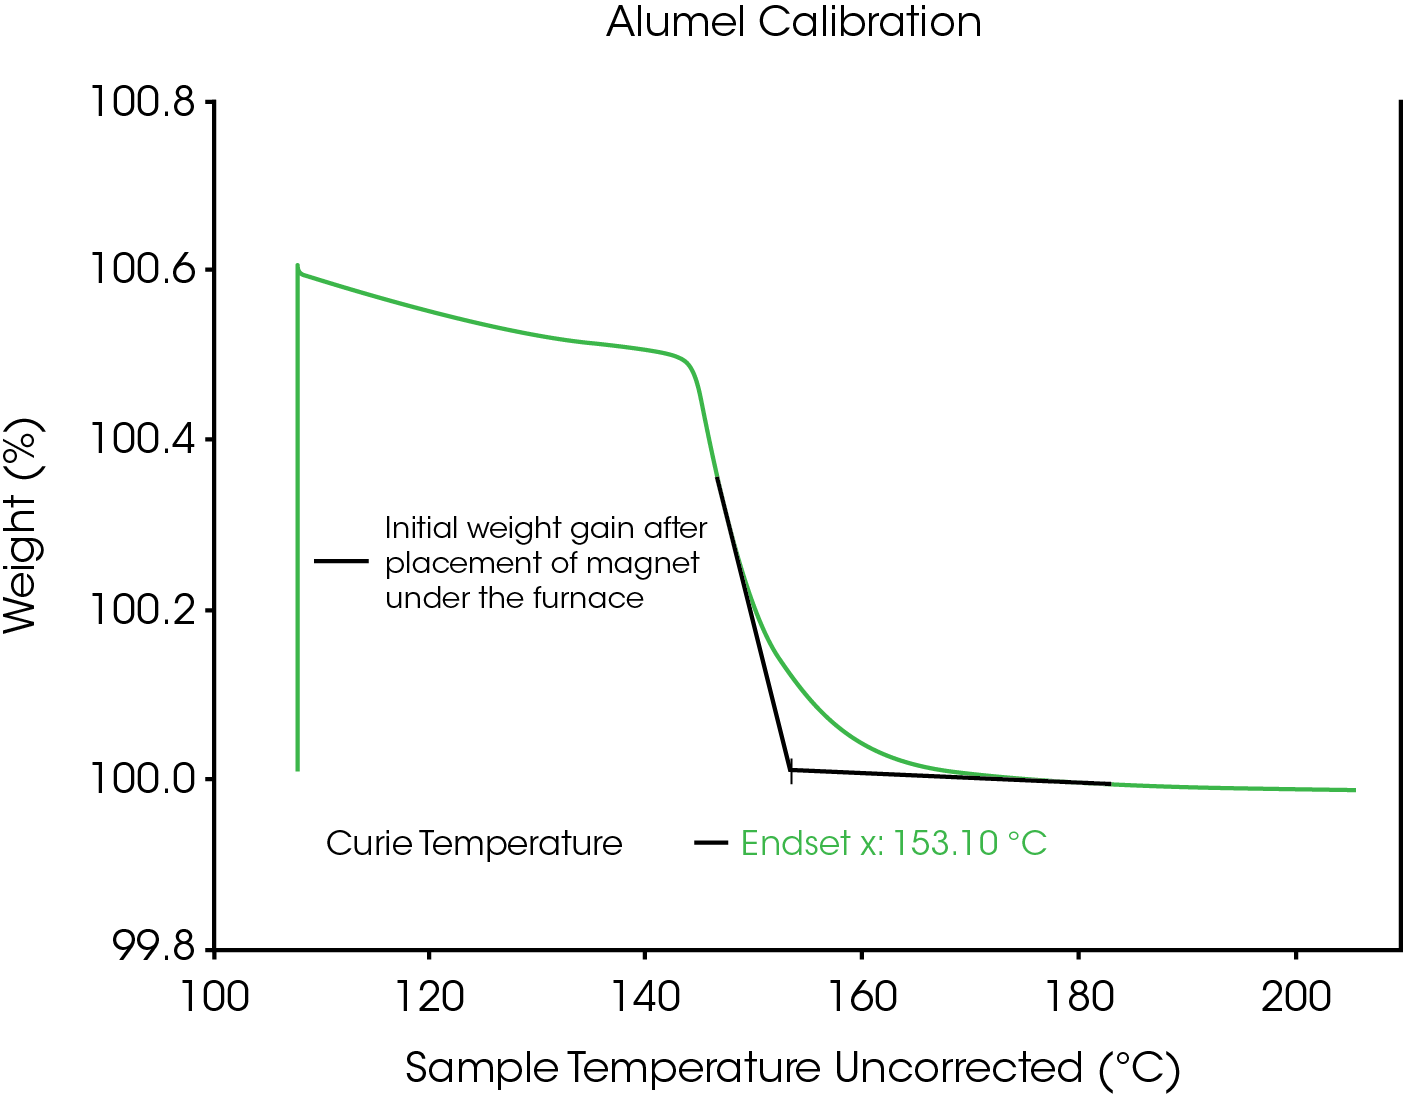 Figure 2. Thermogram for Temperature Calibration using Alumel (TGA)